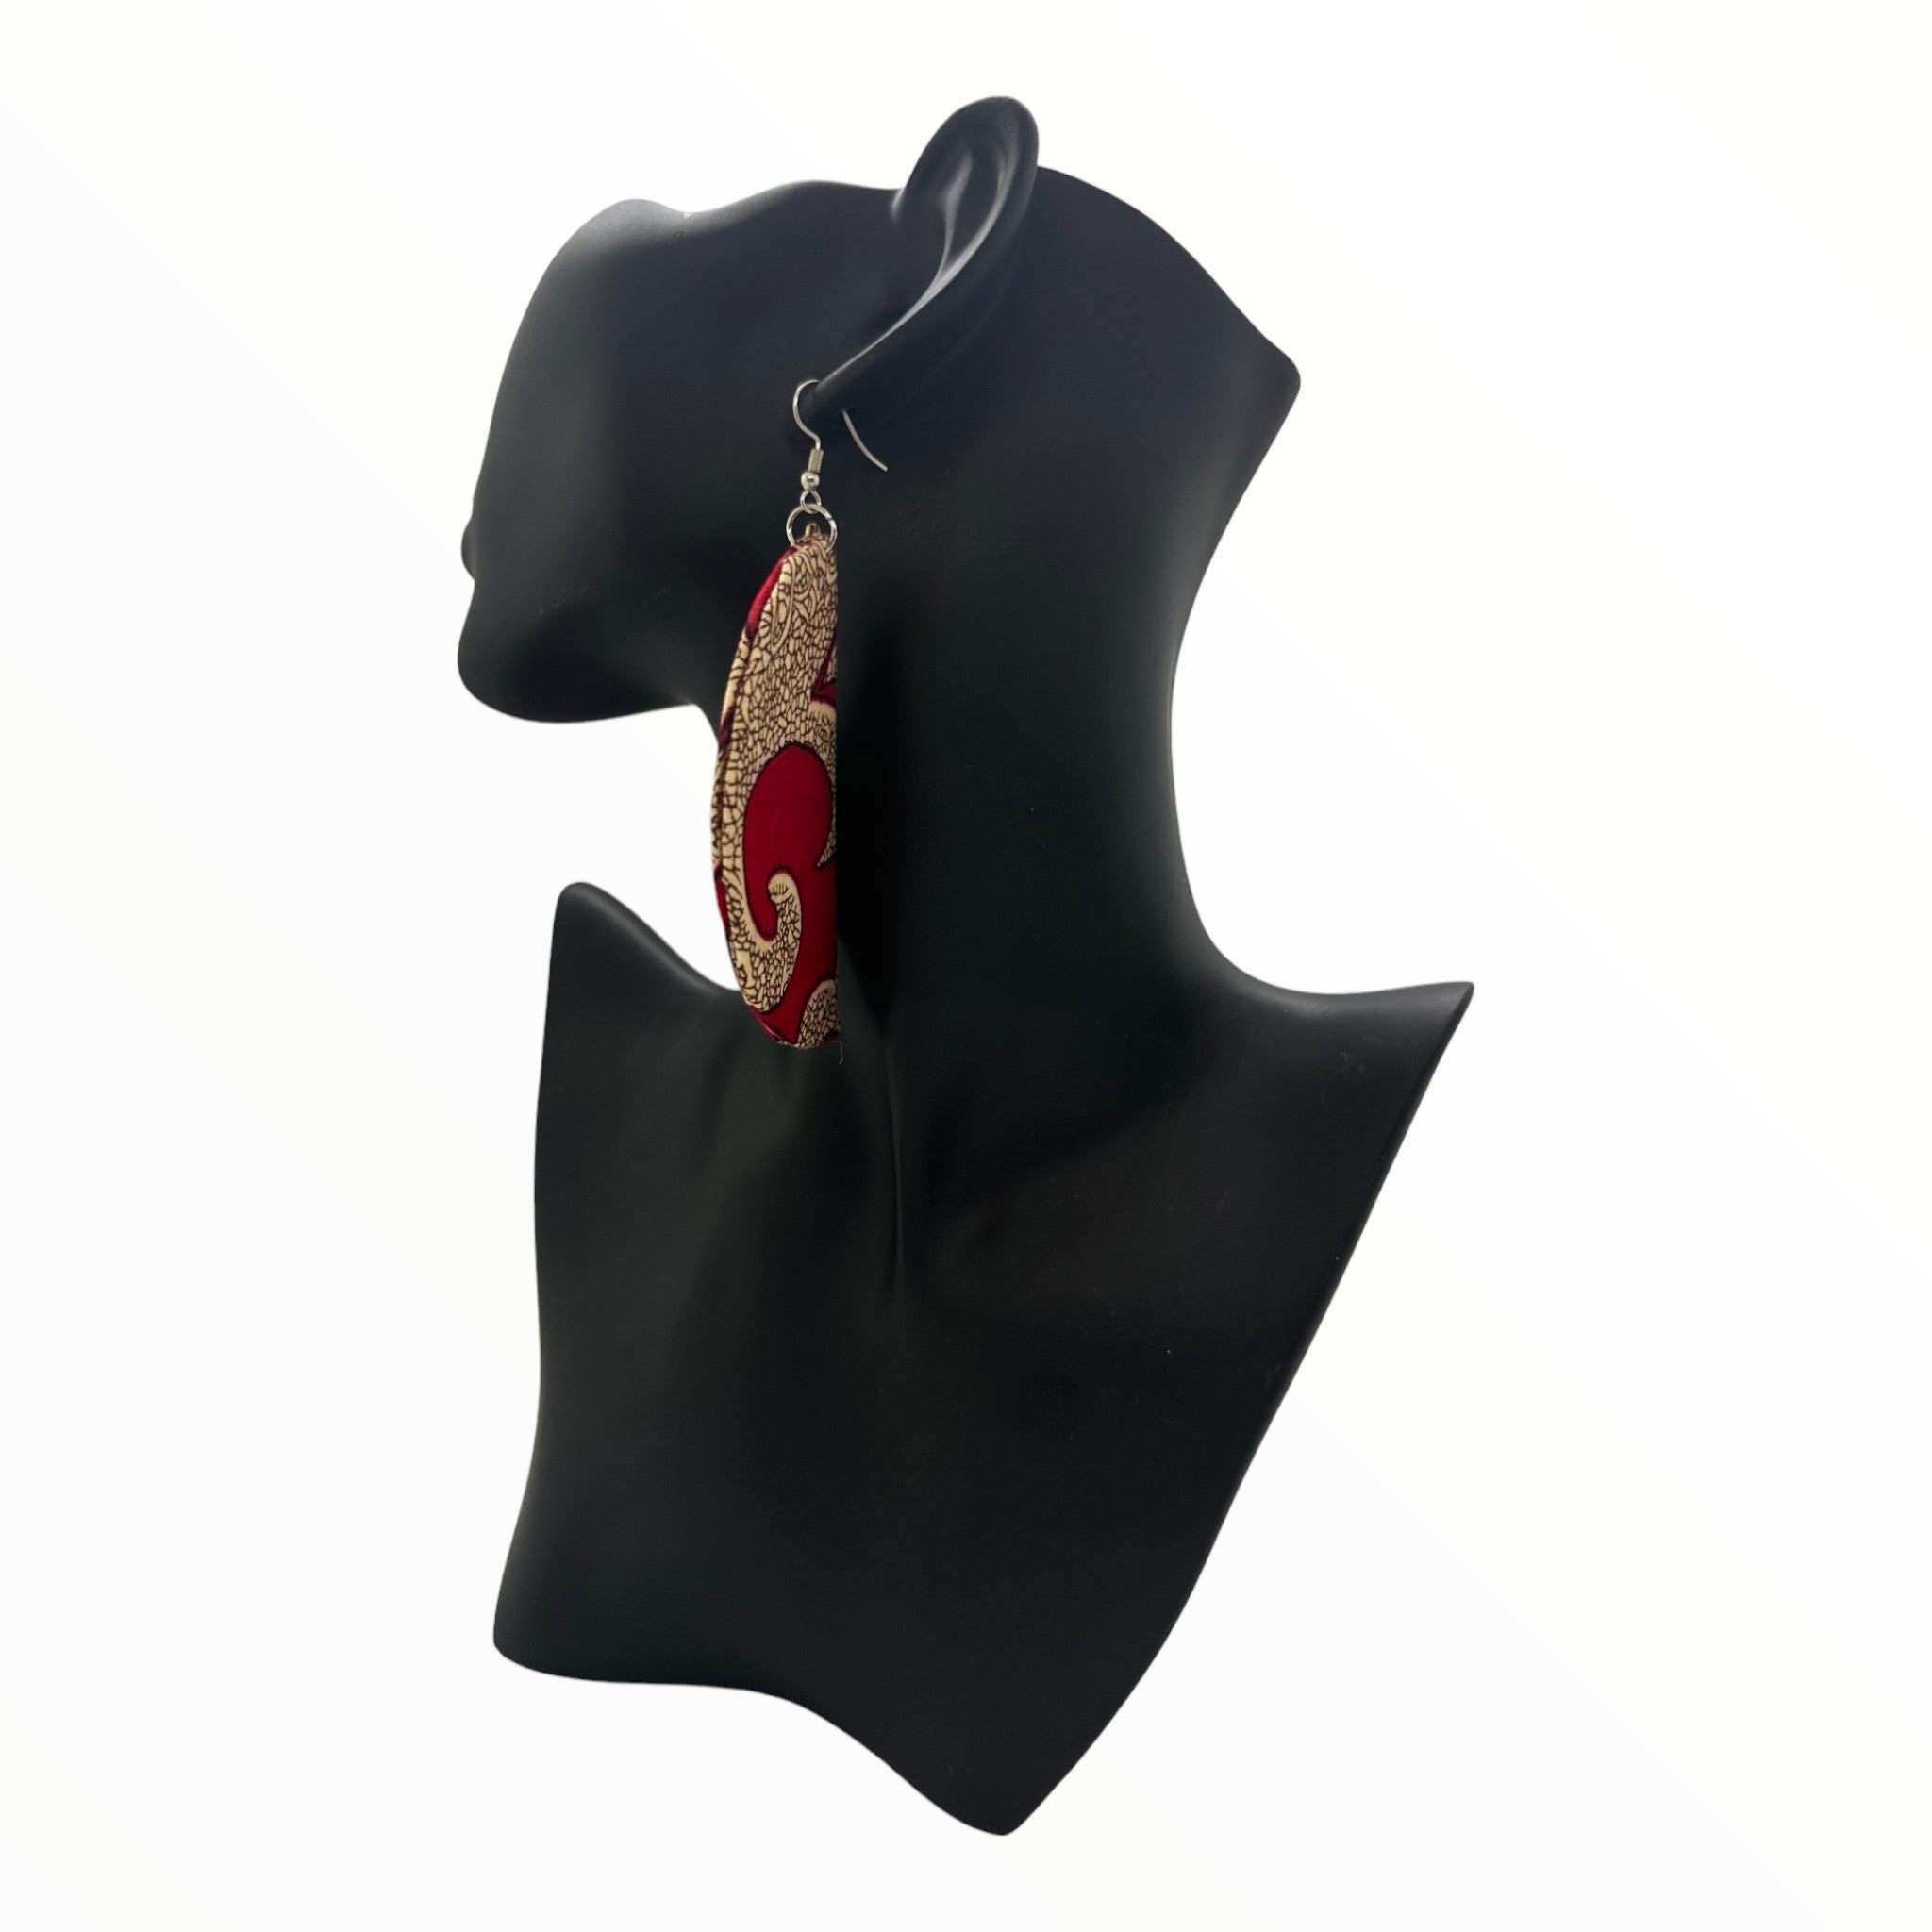 Ankara Printed Fabric Earring- Half Moon Hook (Red)